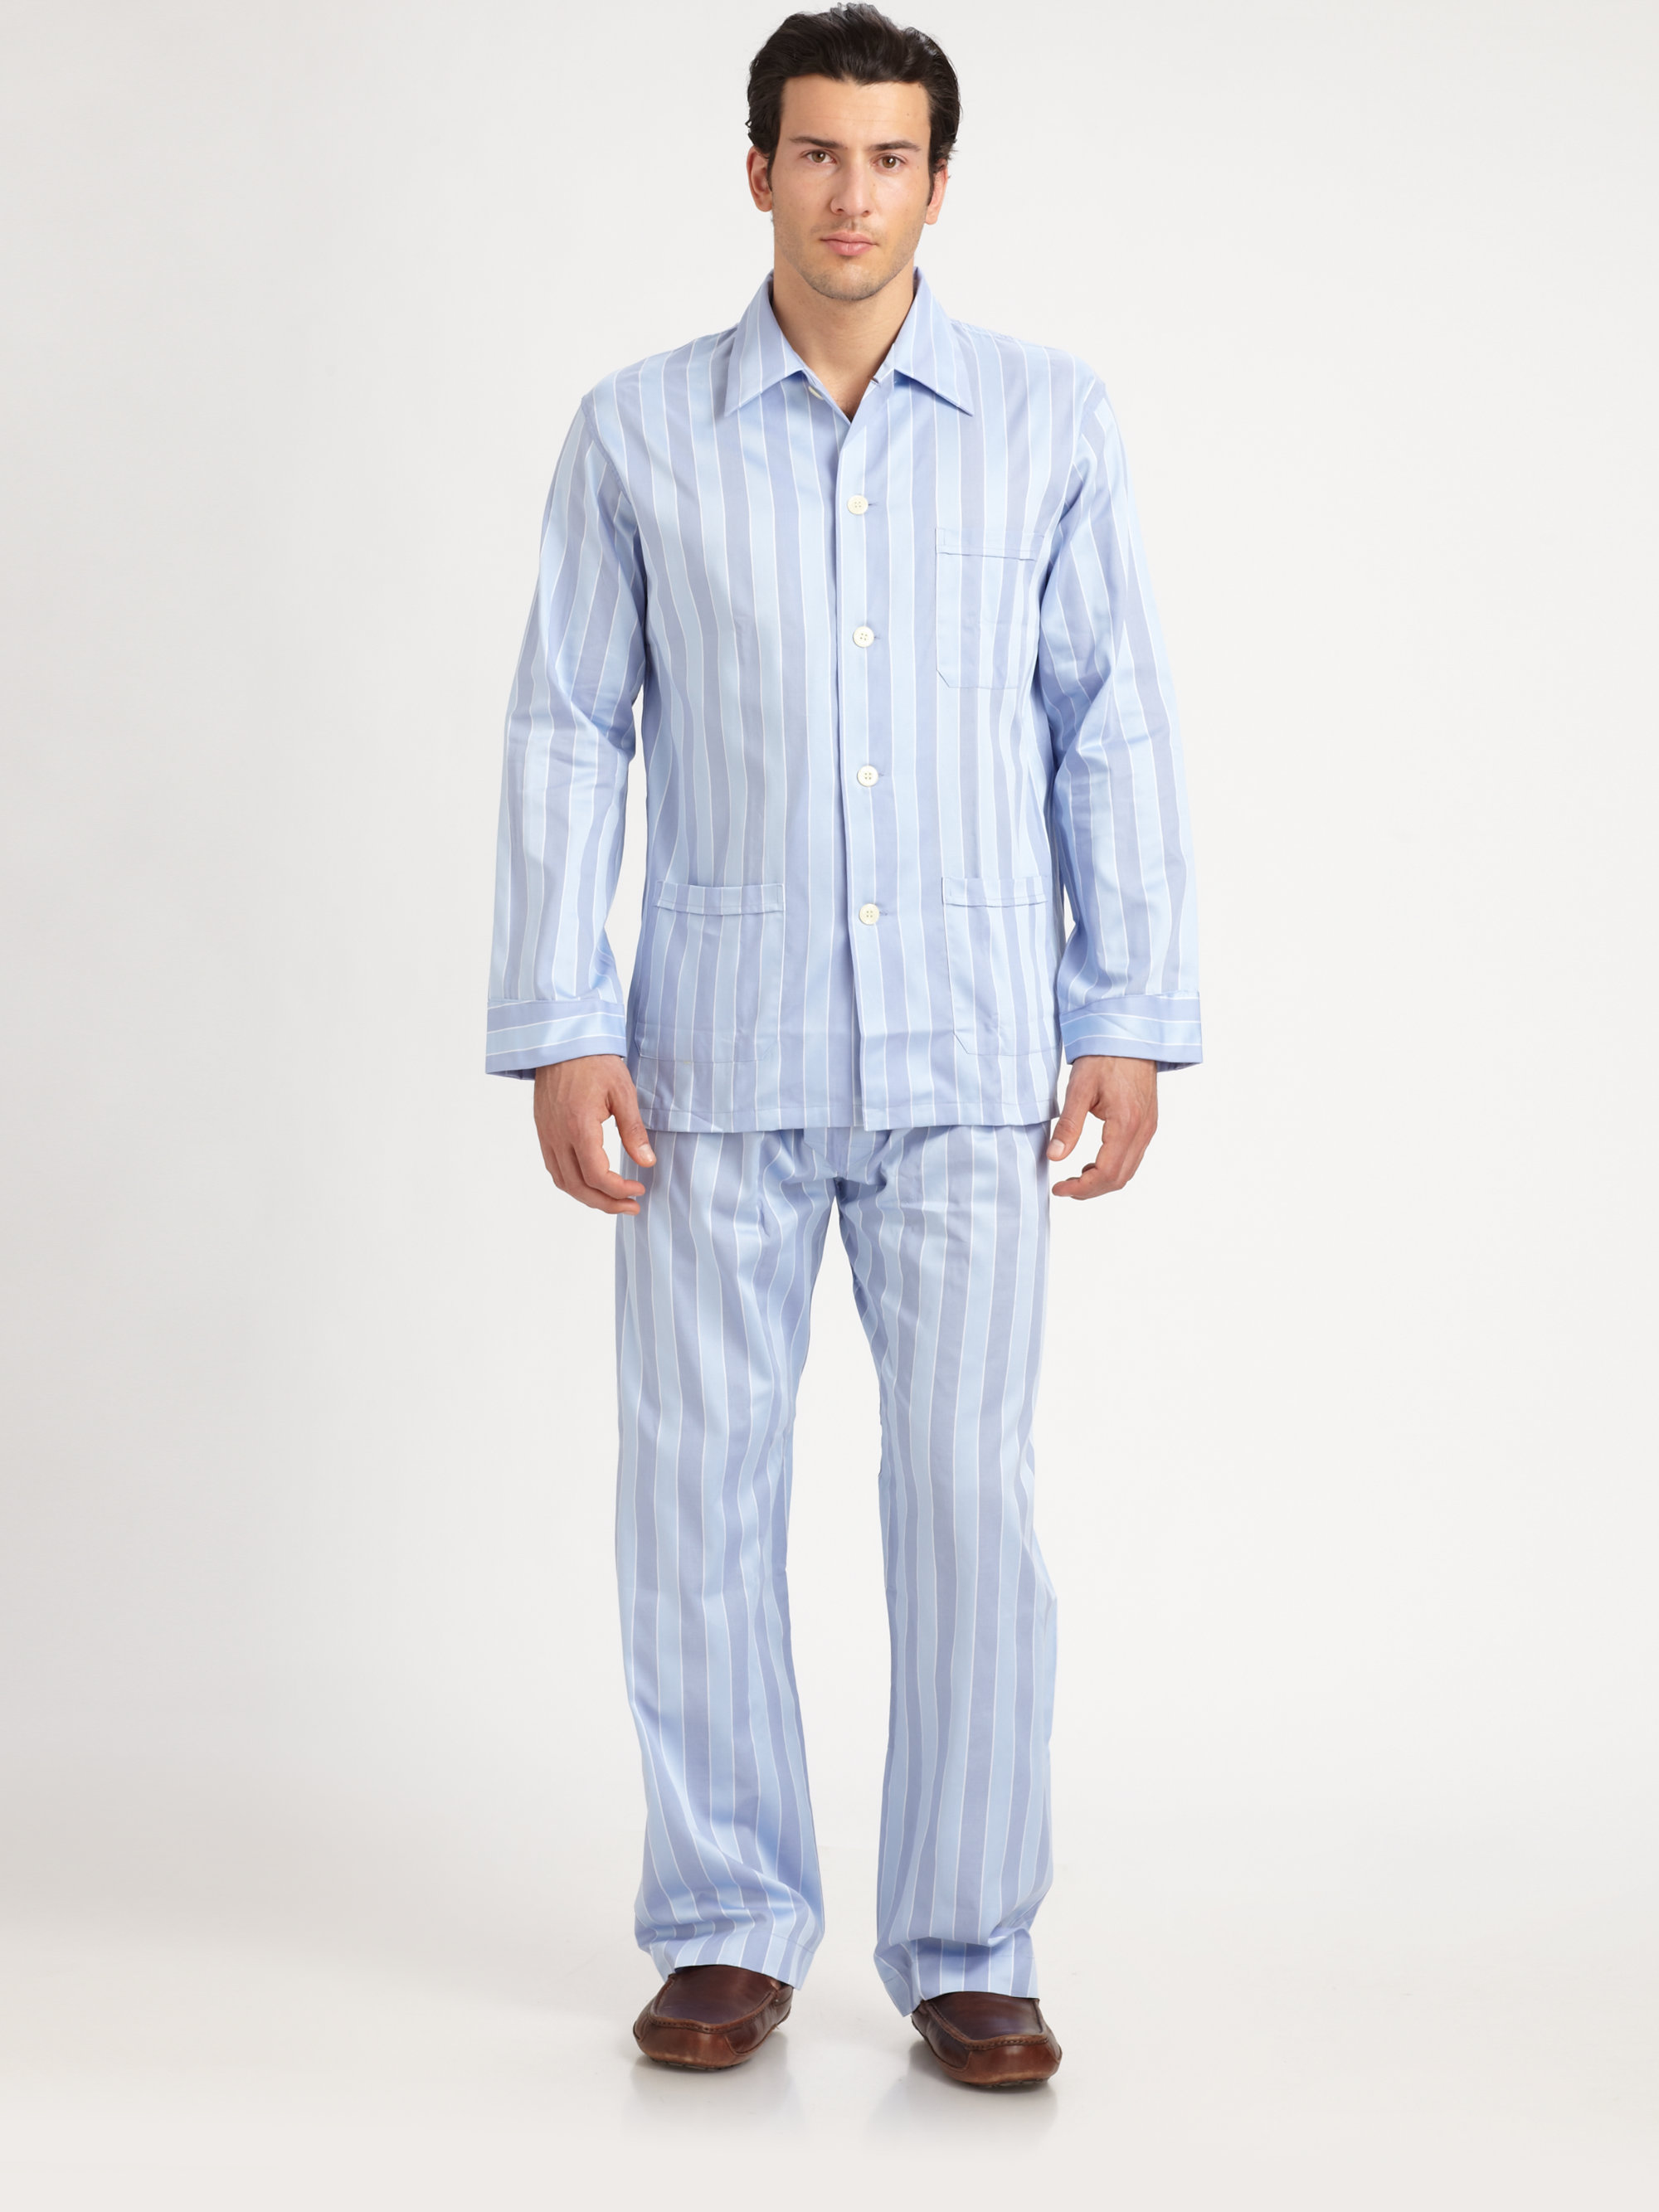 Lyst - Derek Rose Classic Cotton Pajama Set in Blue for Men